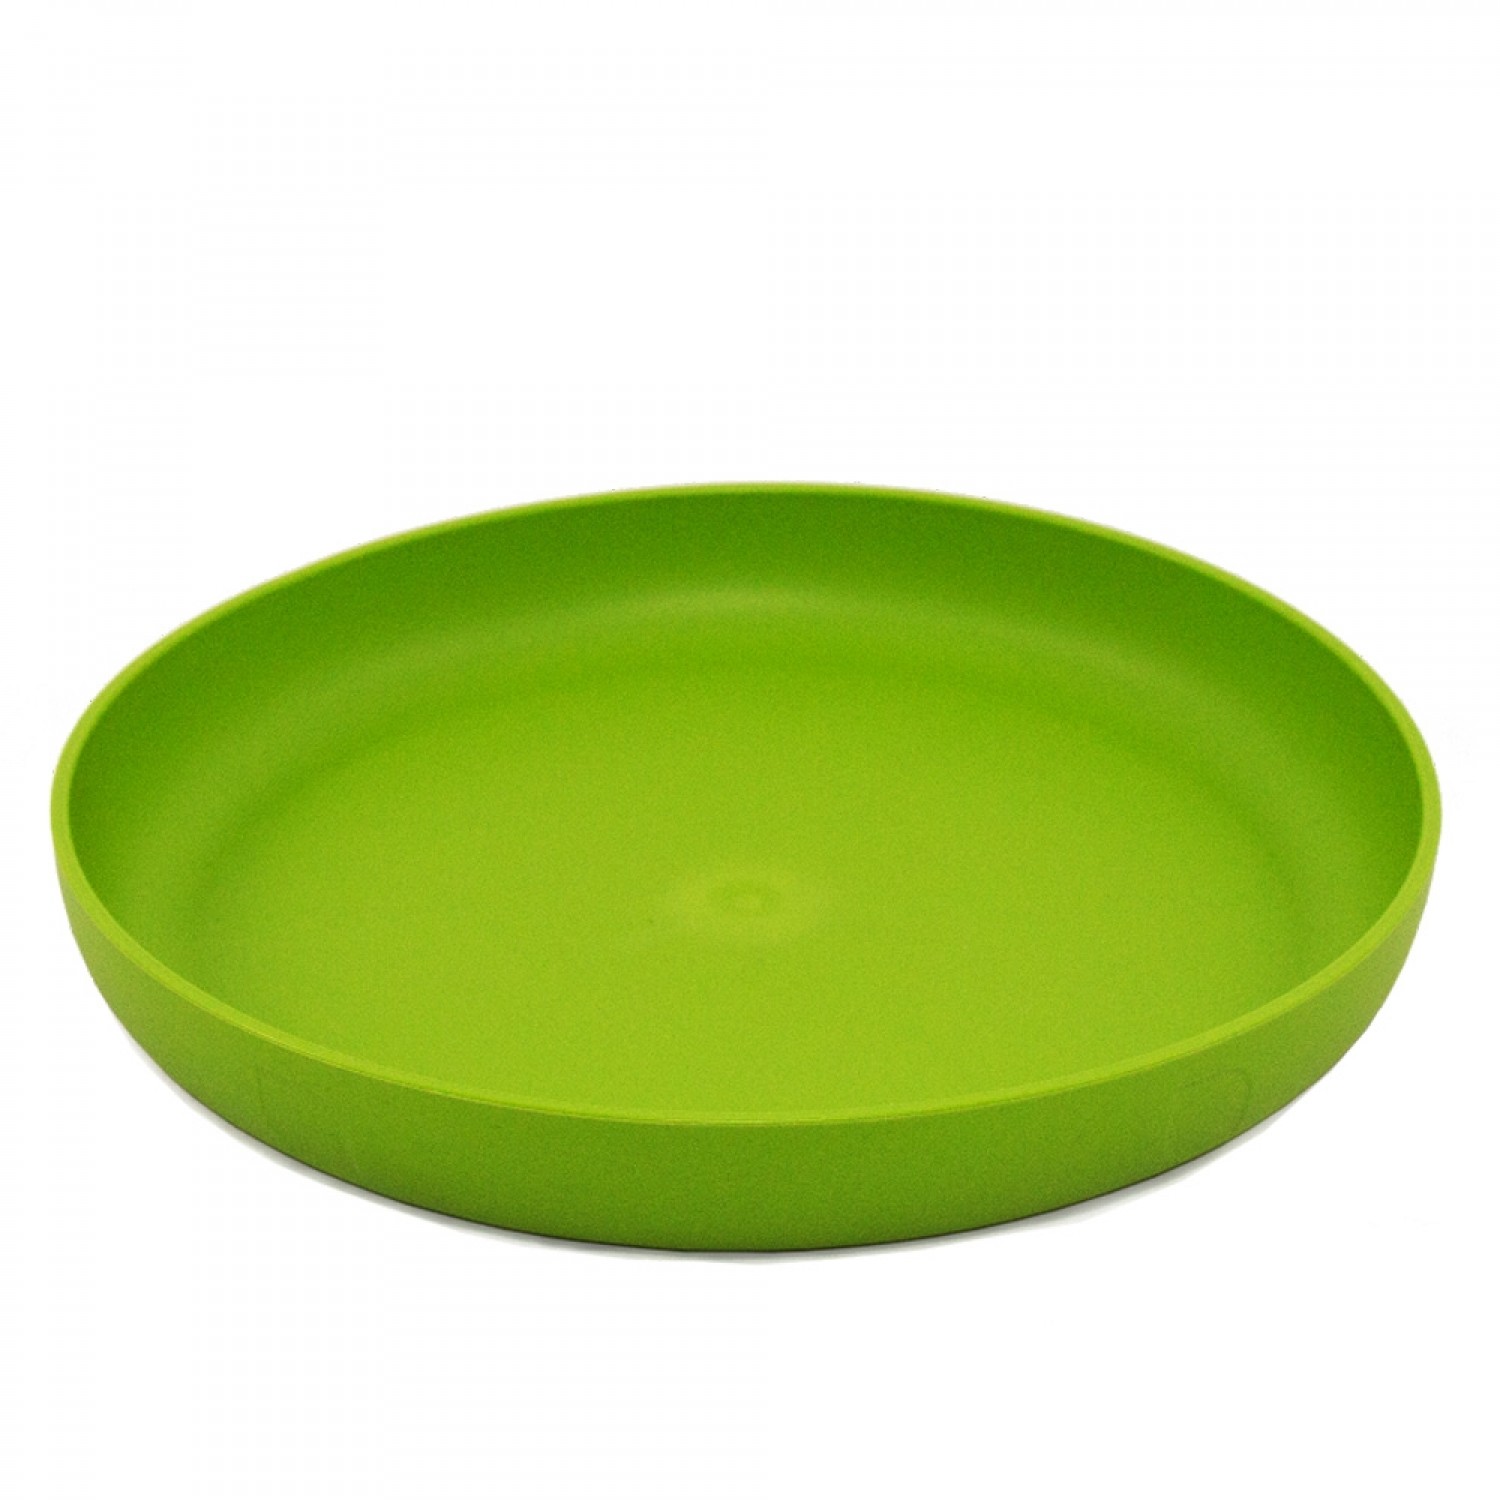 Colourful Plates from Bioplastics - Lime | ajaa!